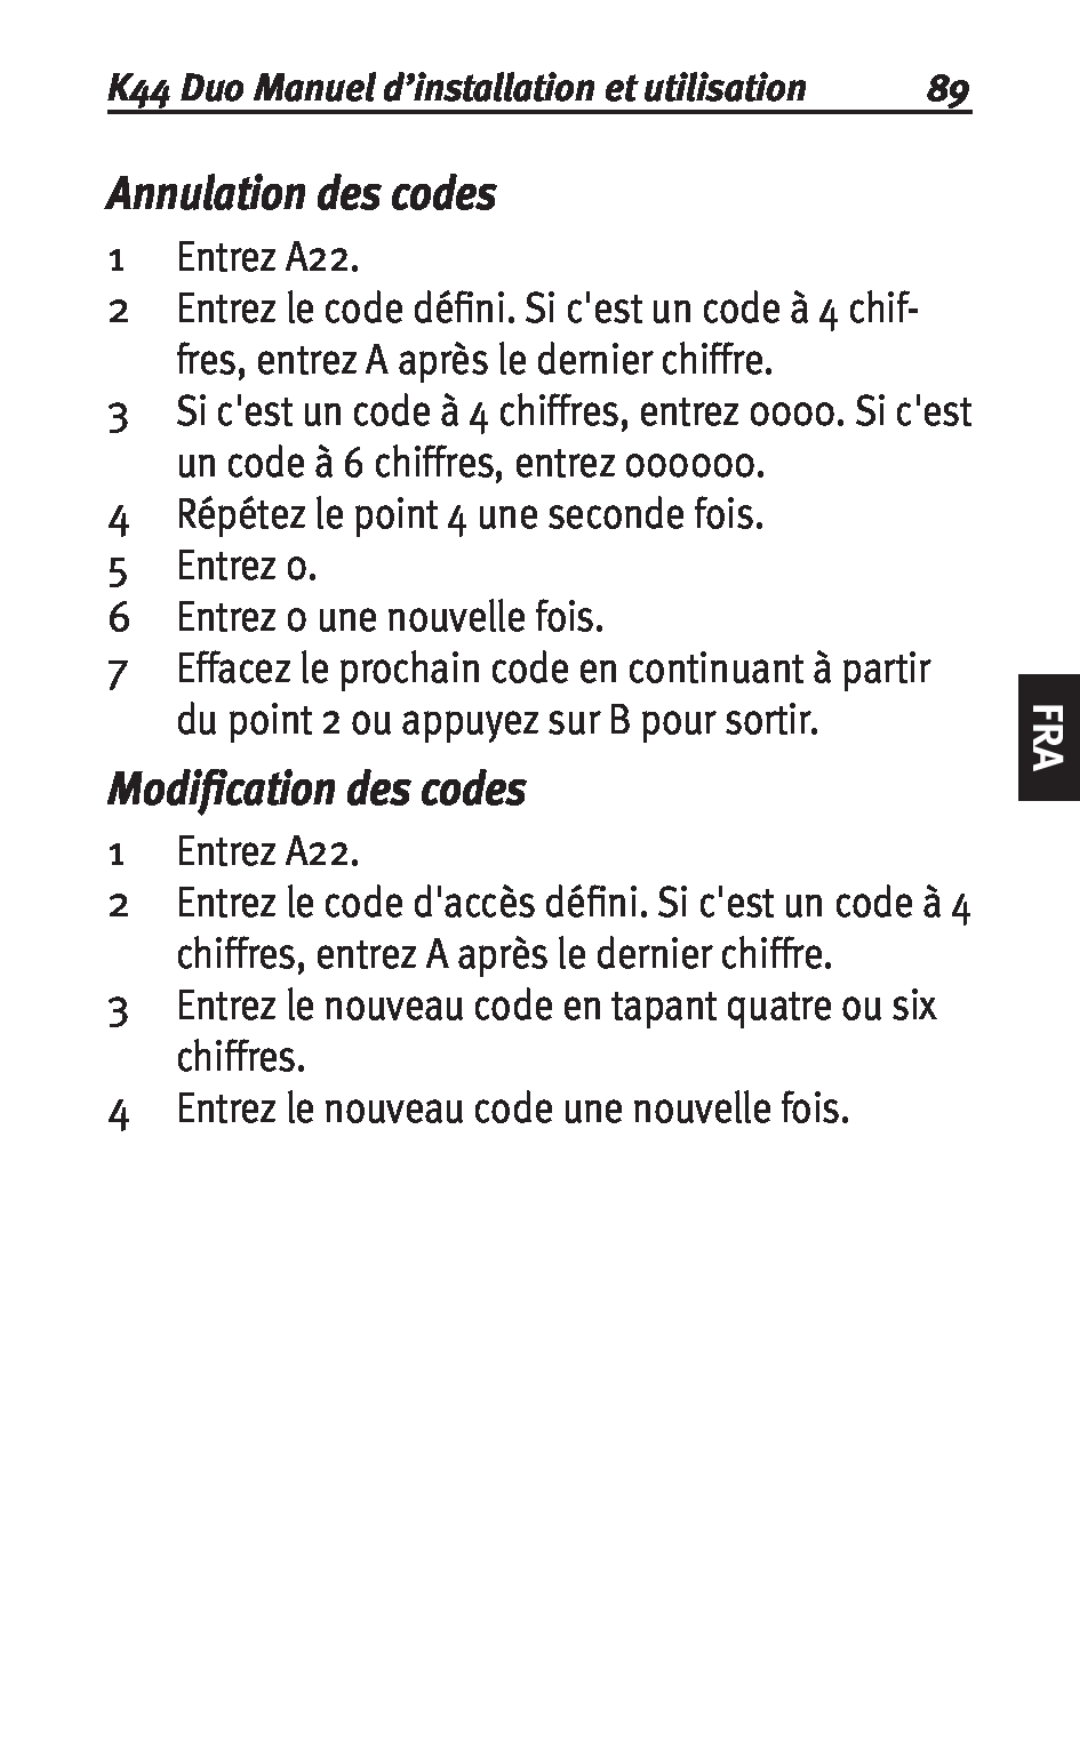 Siemens K44 user manual Annulation des codes, Modification des codes 